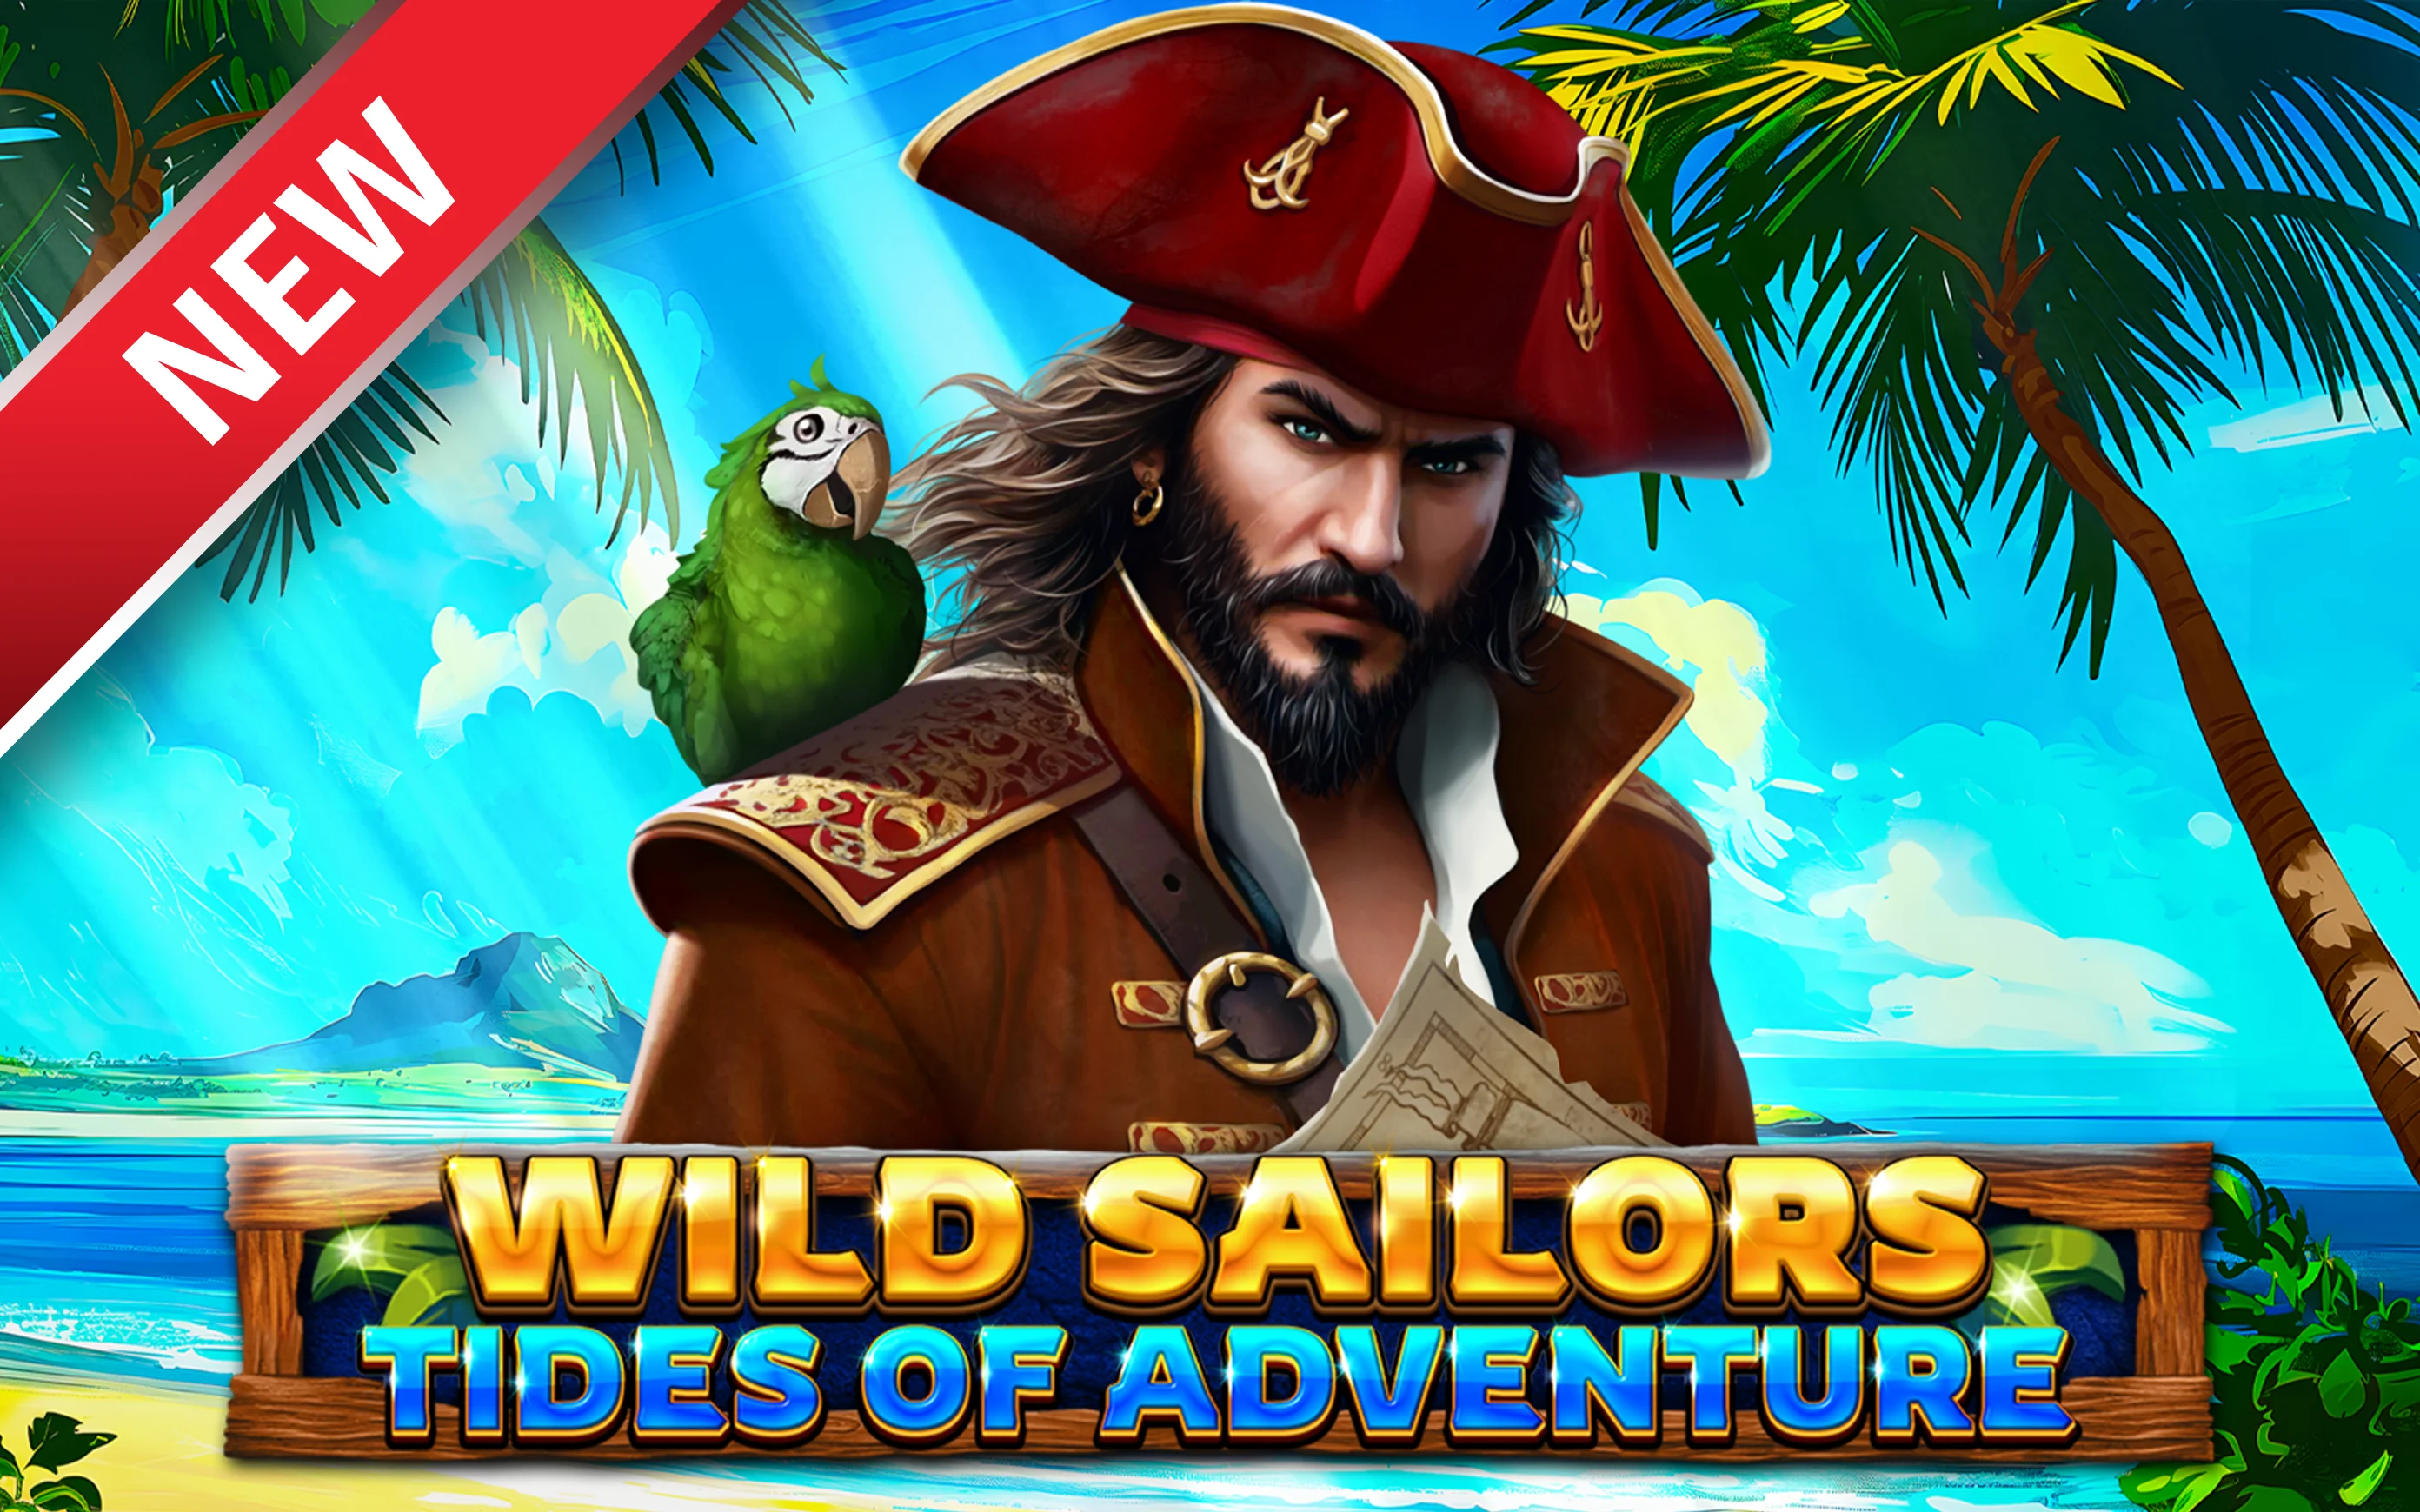 Play Wild Sailors – Tides of Adventure on Starcasino.be online casino